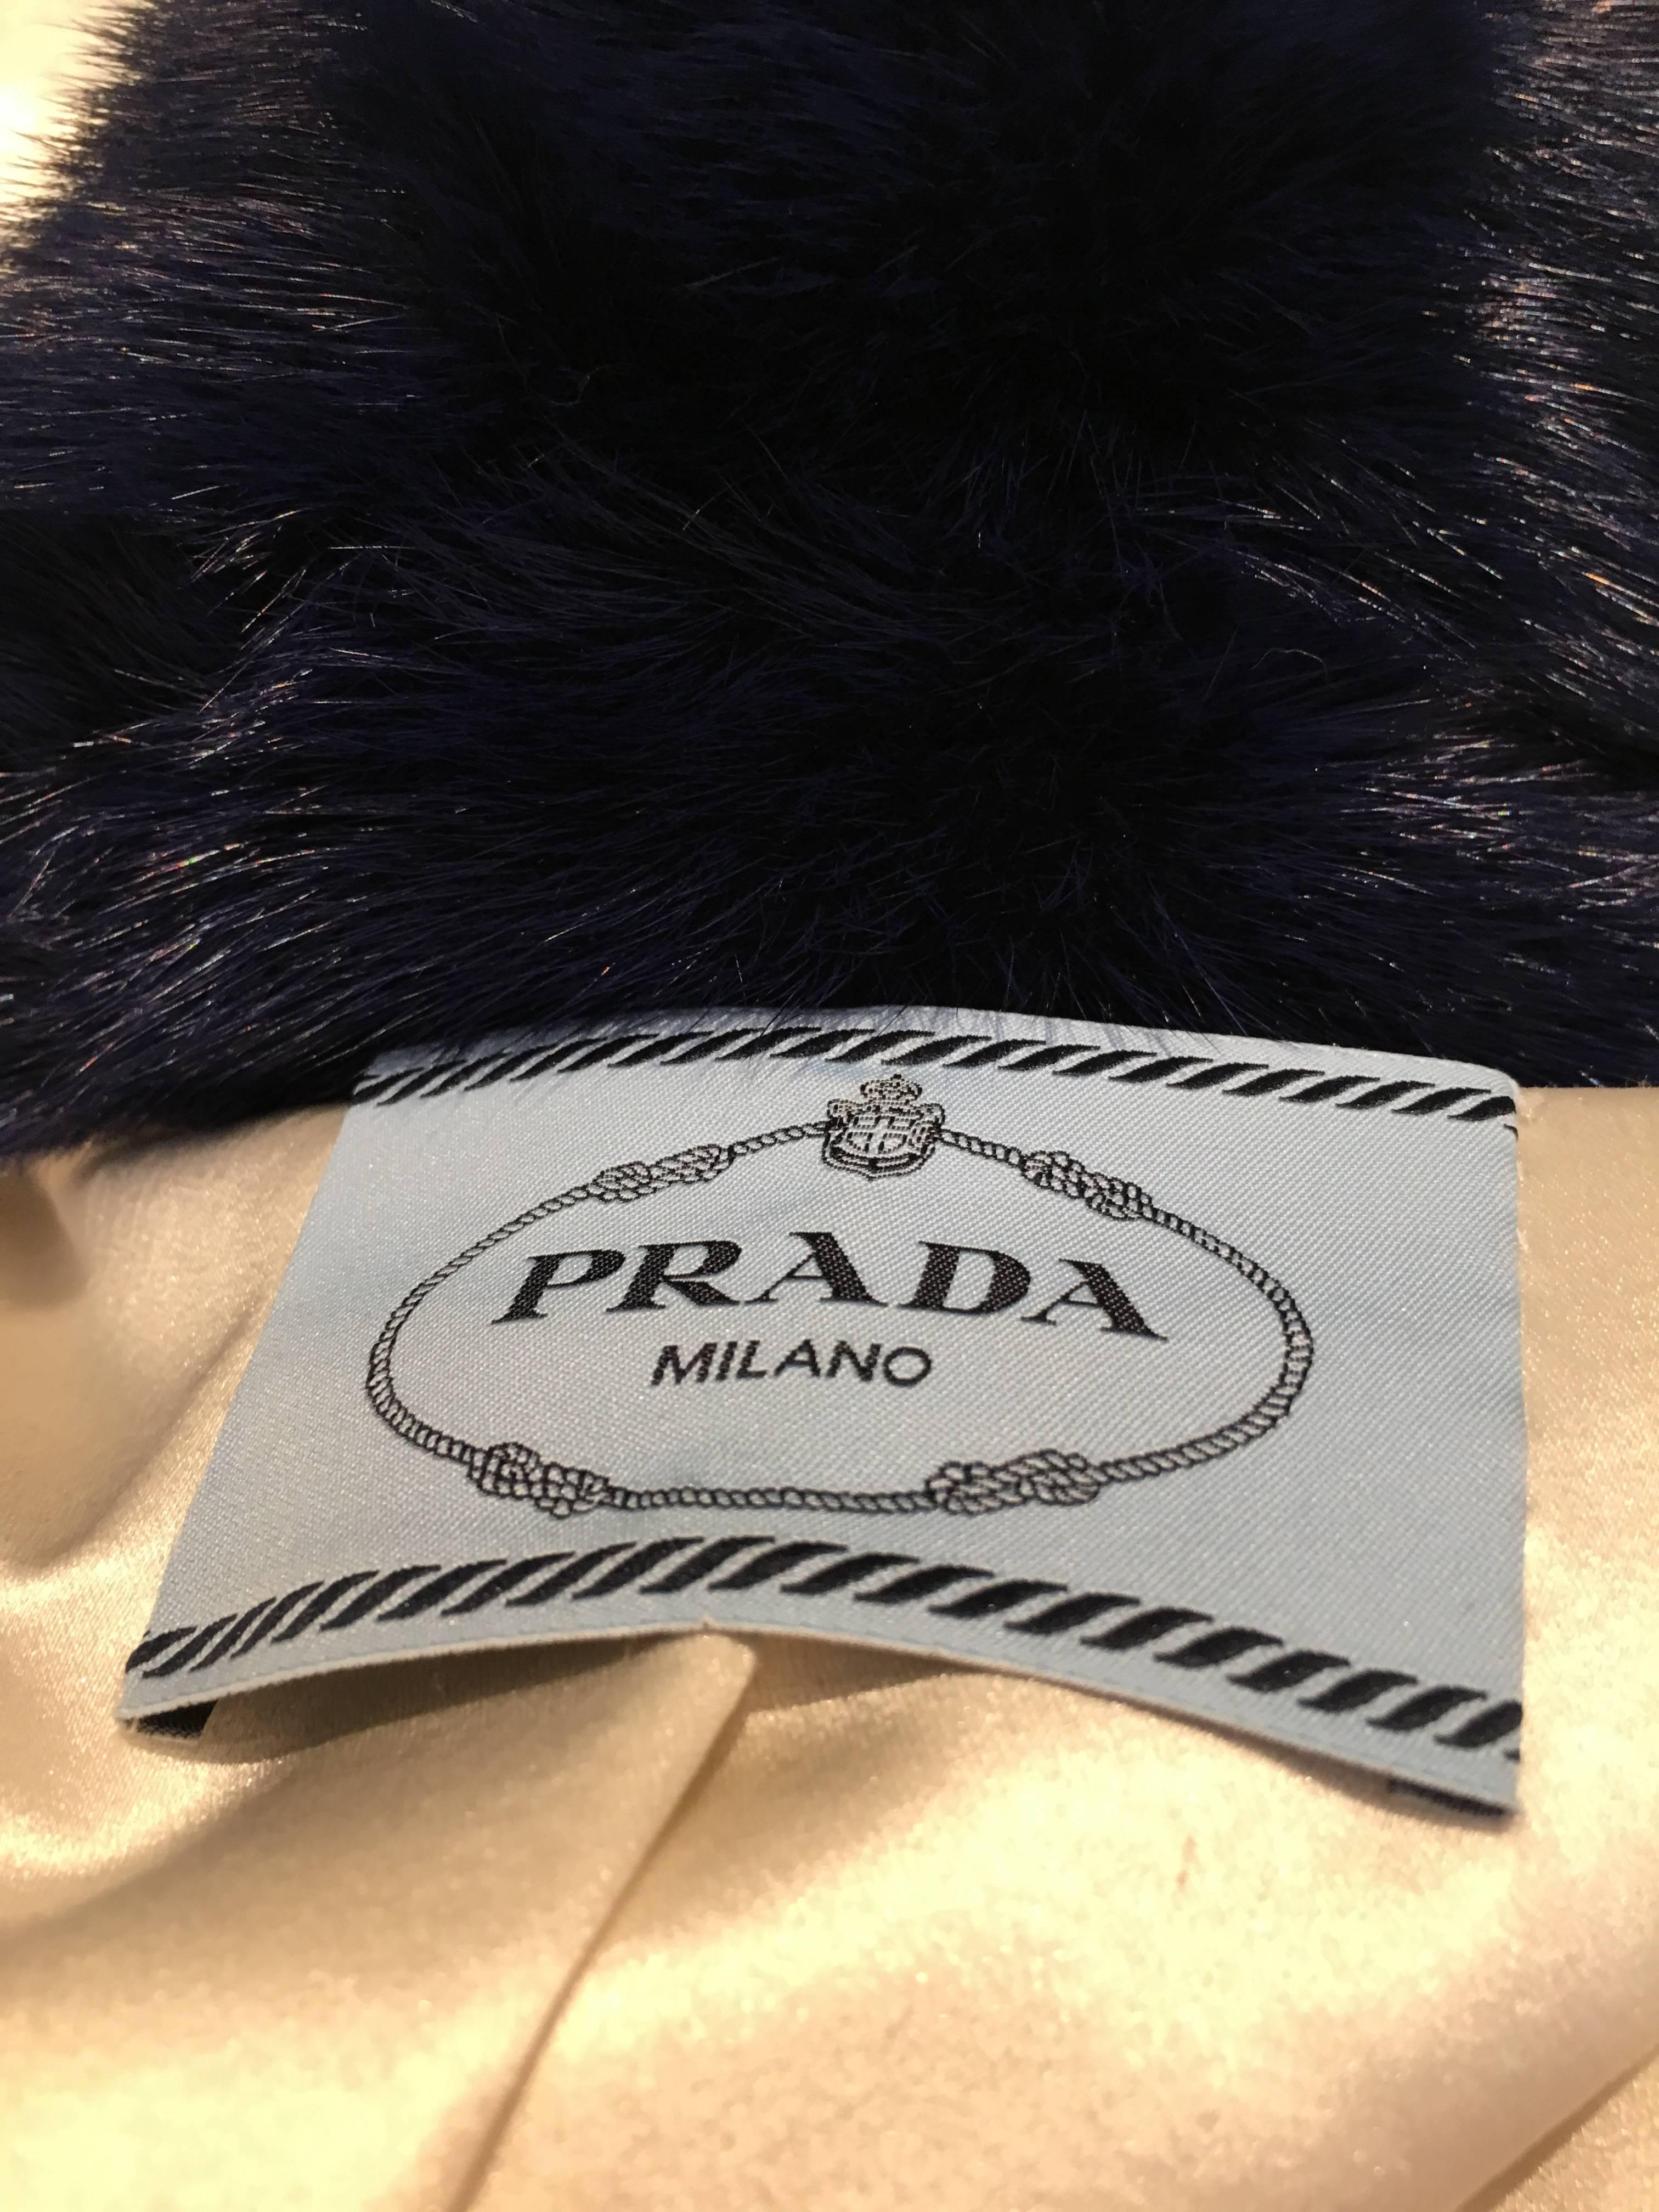 Rare Prada Face Mink Fur Coat (Spring 2014 Ready-to-Wear) 1